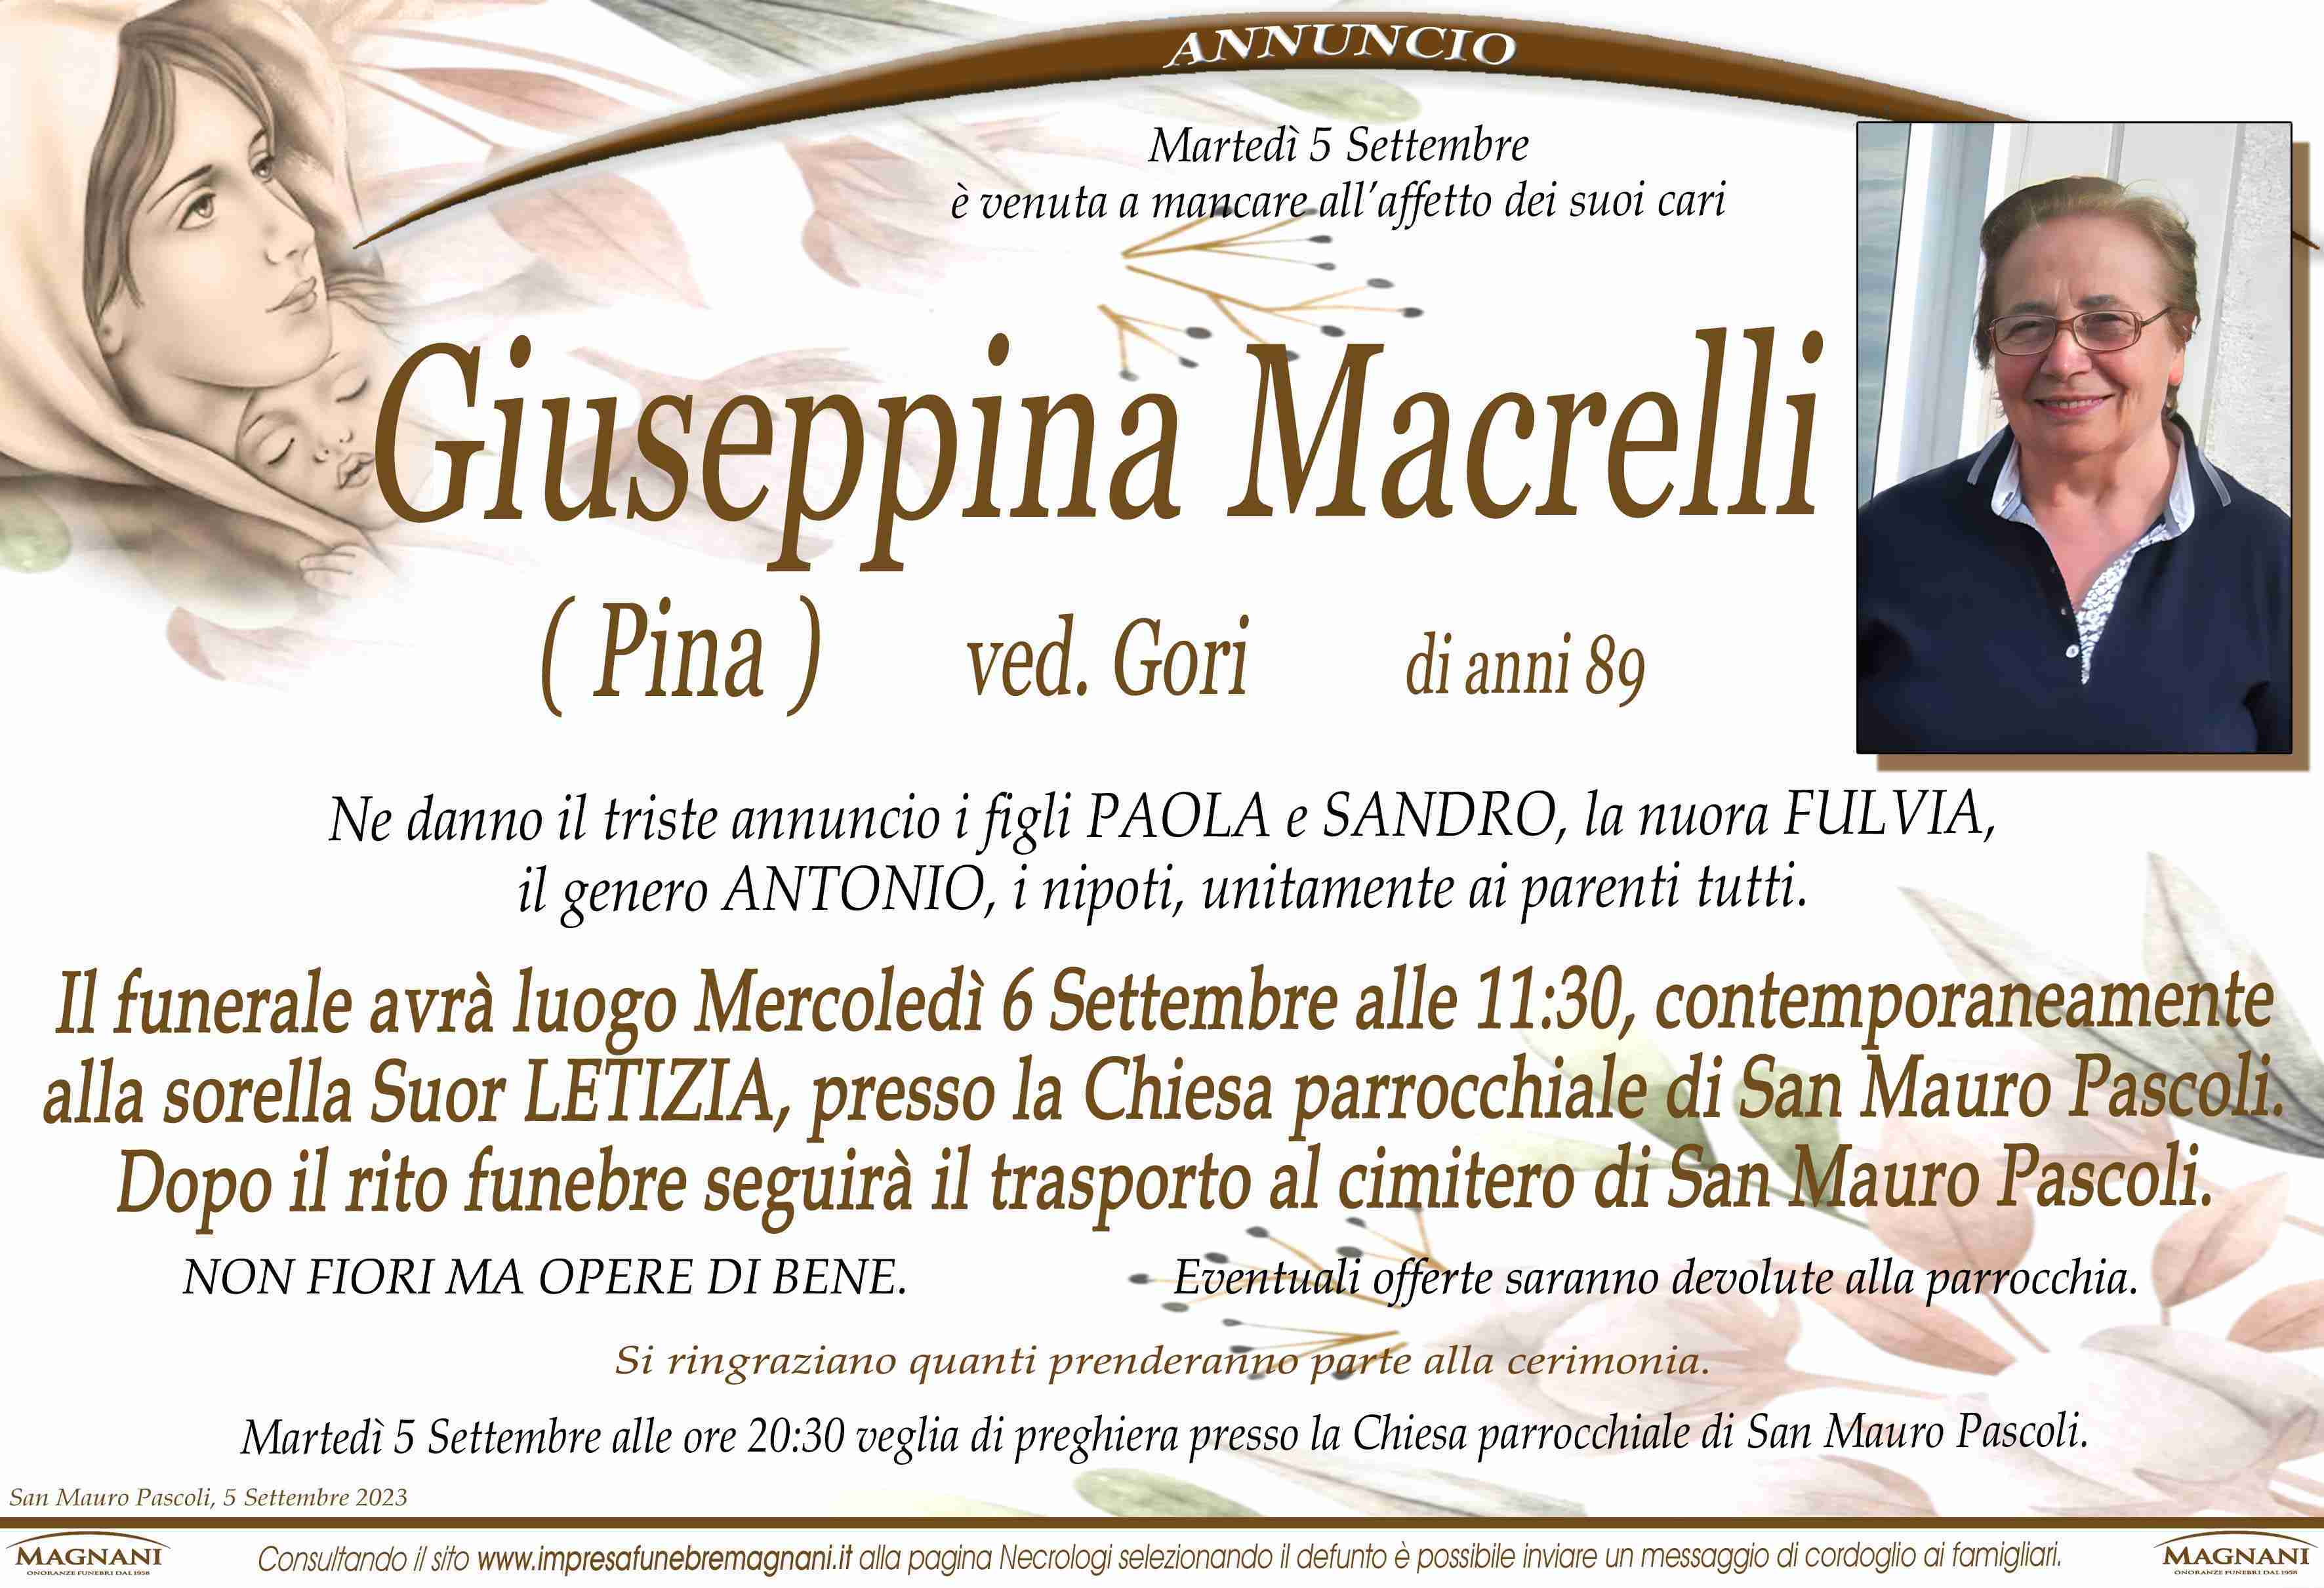 Giuseppina Macrelli